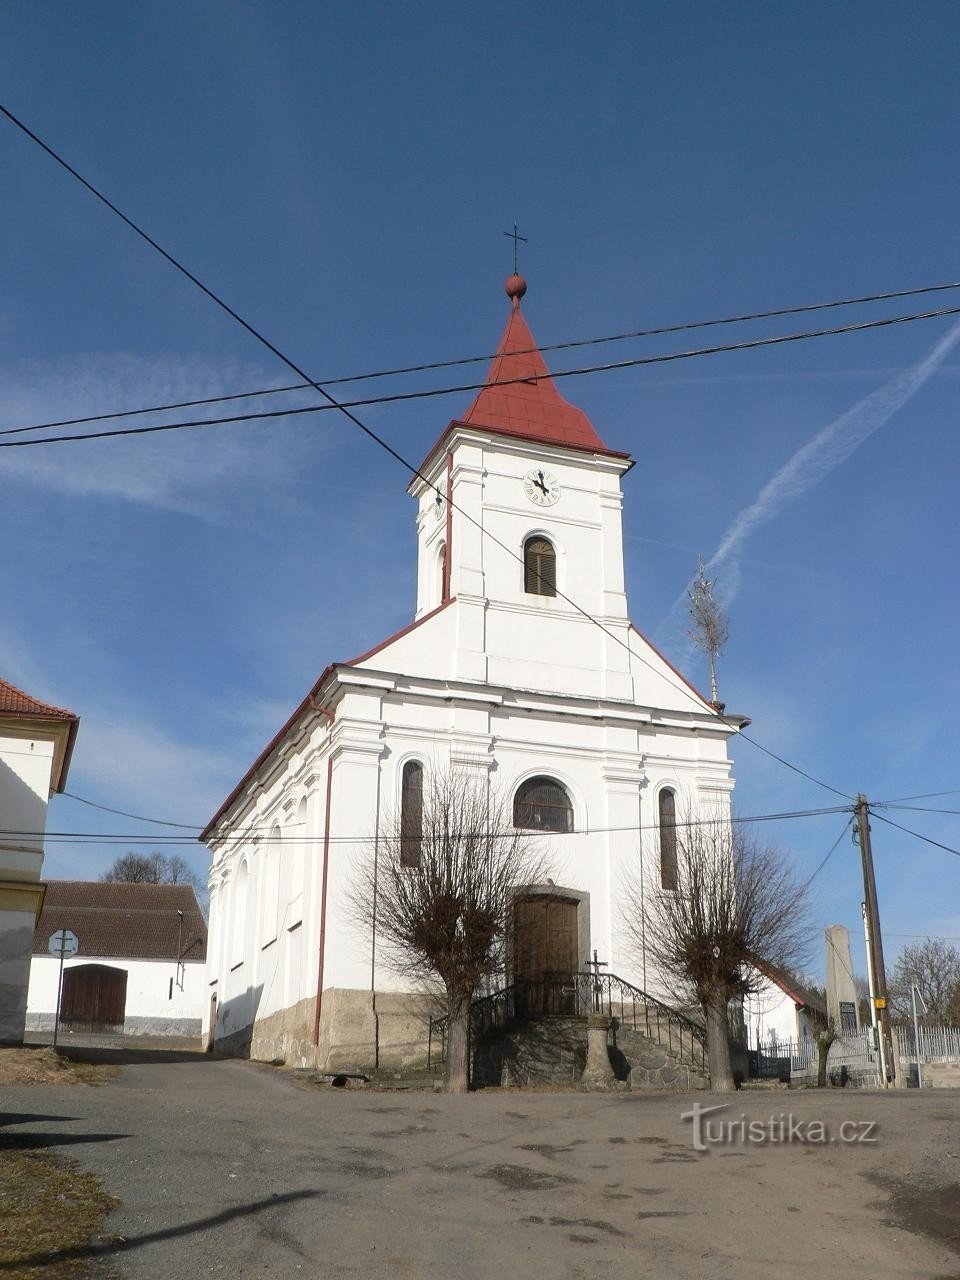 Velenovy, forsiden af ​​kirken